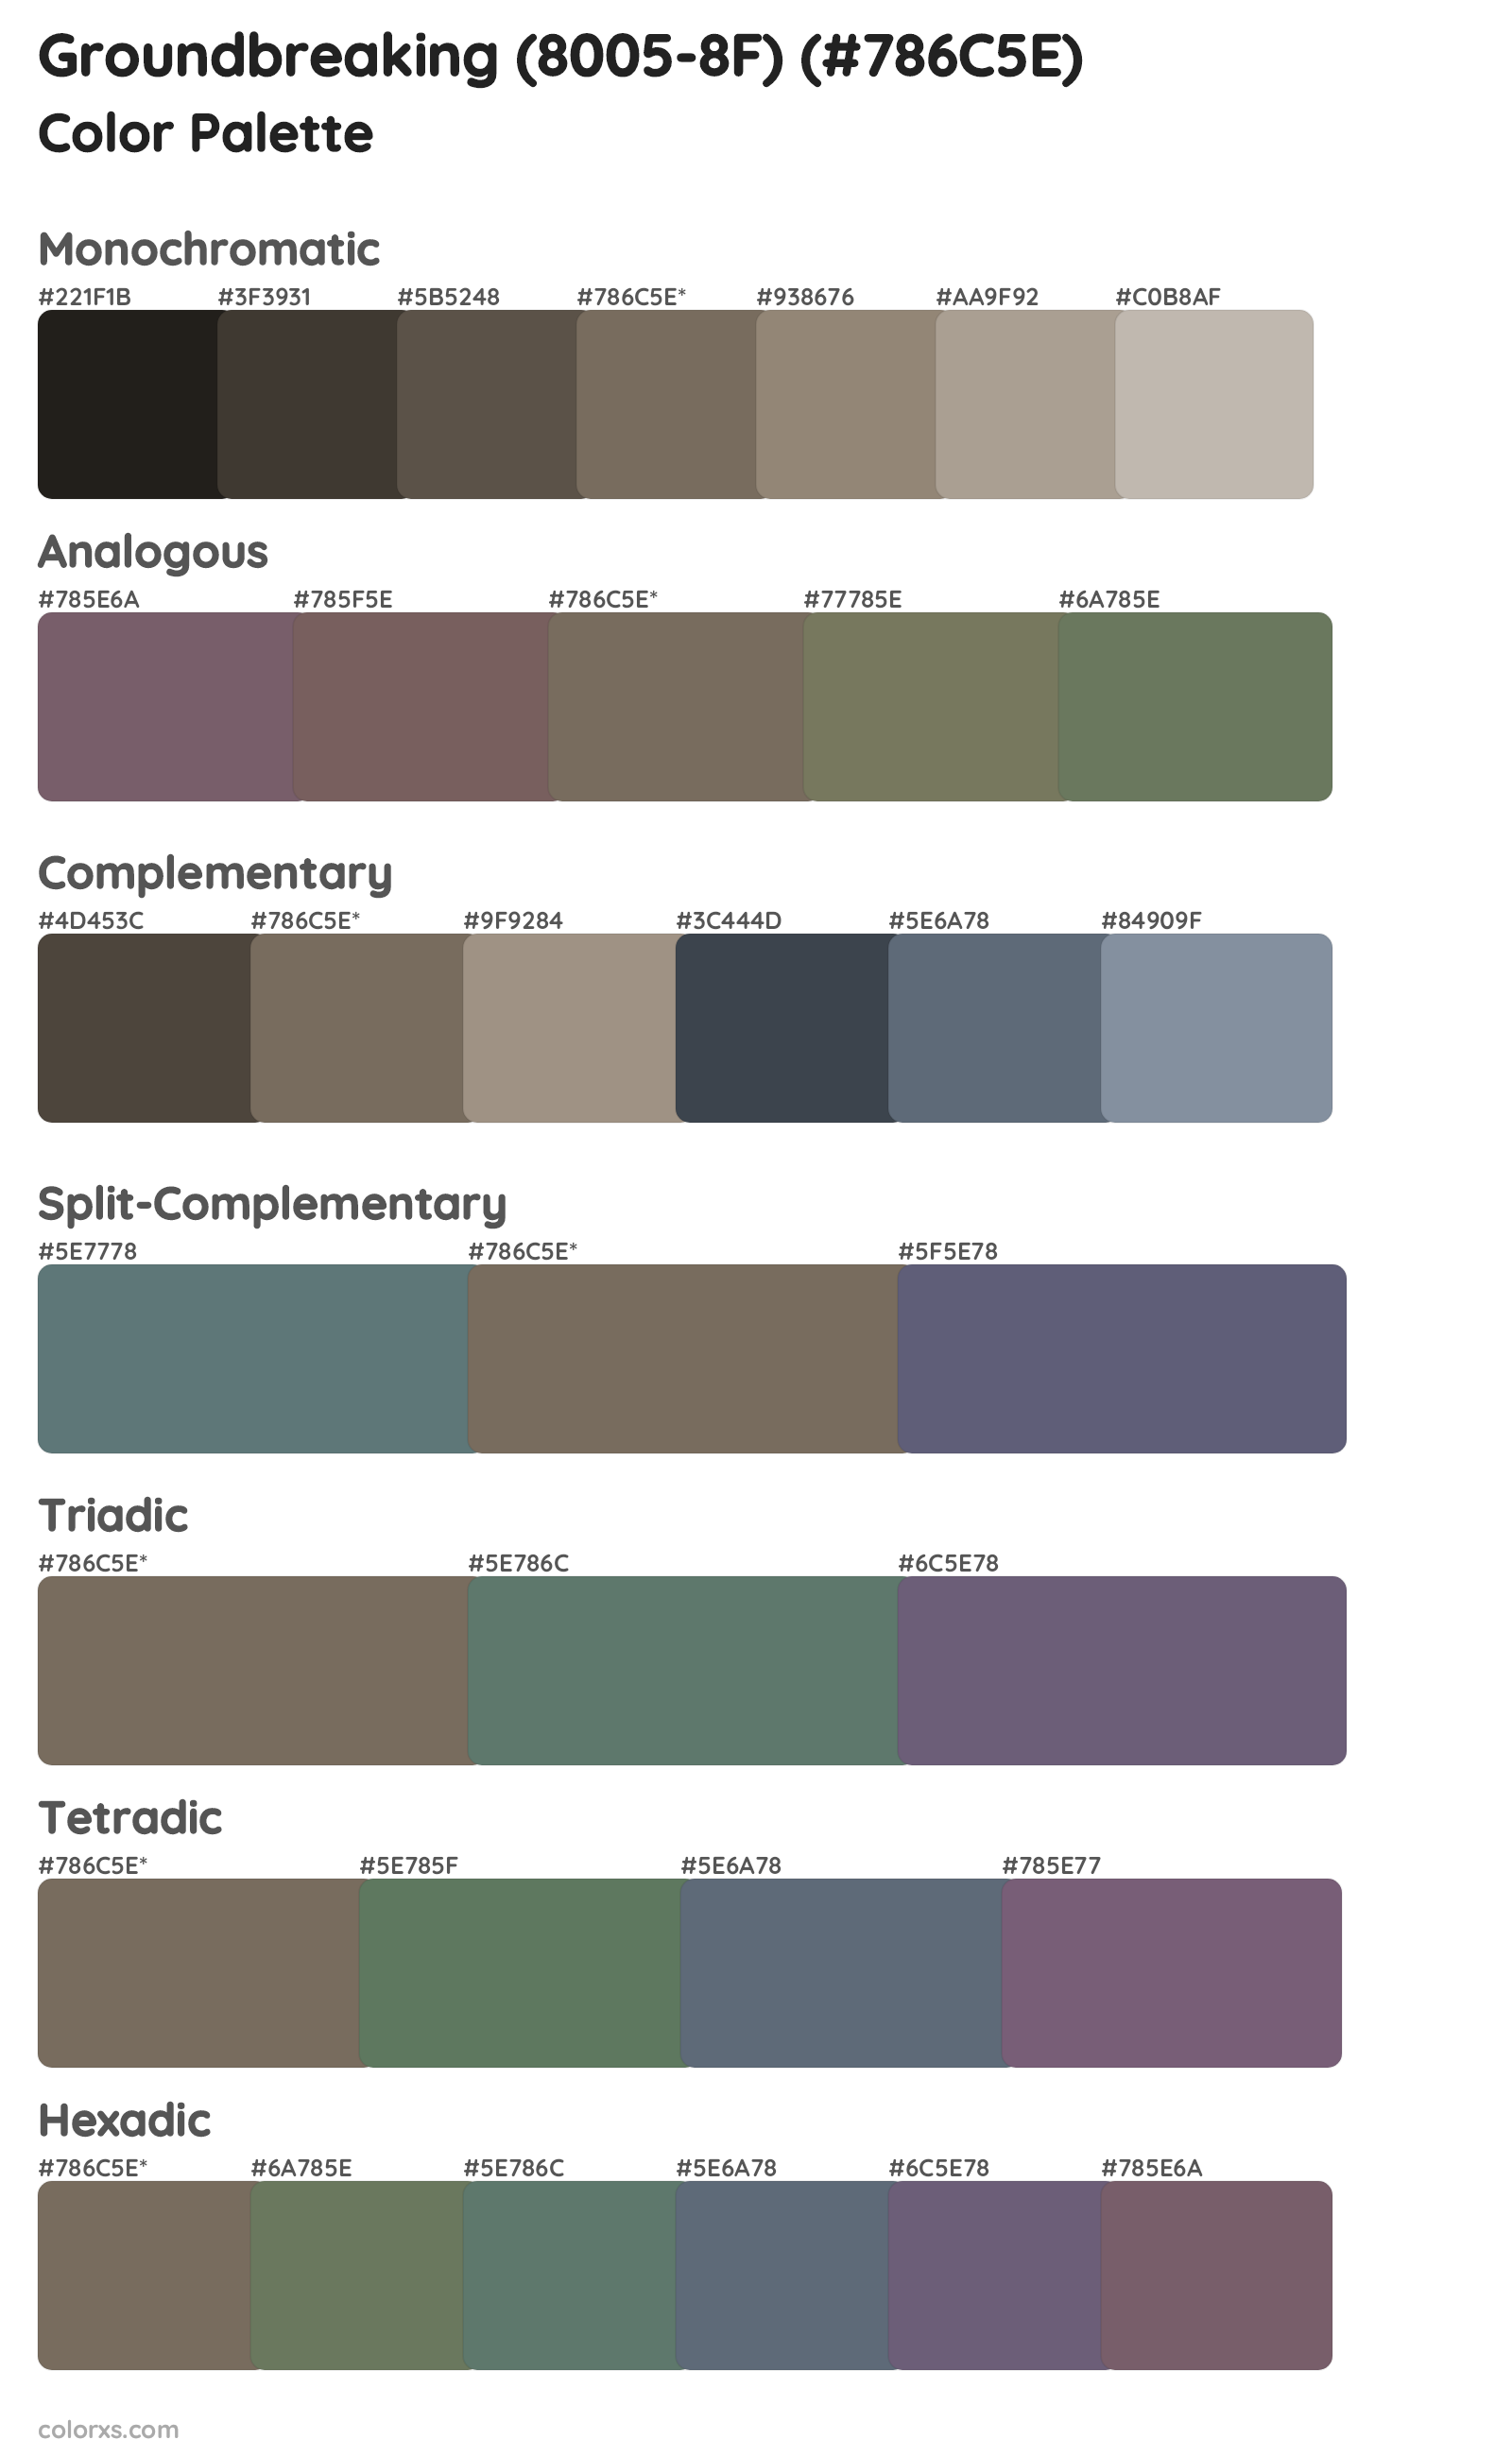 Groundbreaking (8005-8F) Color Scheme Palettes